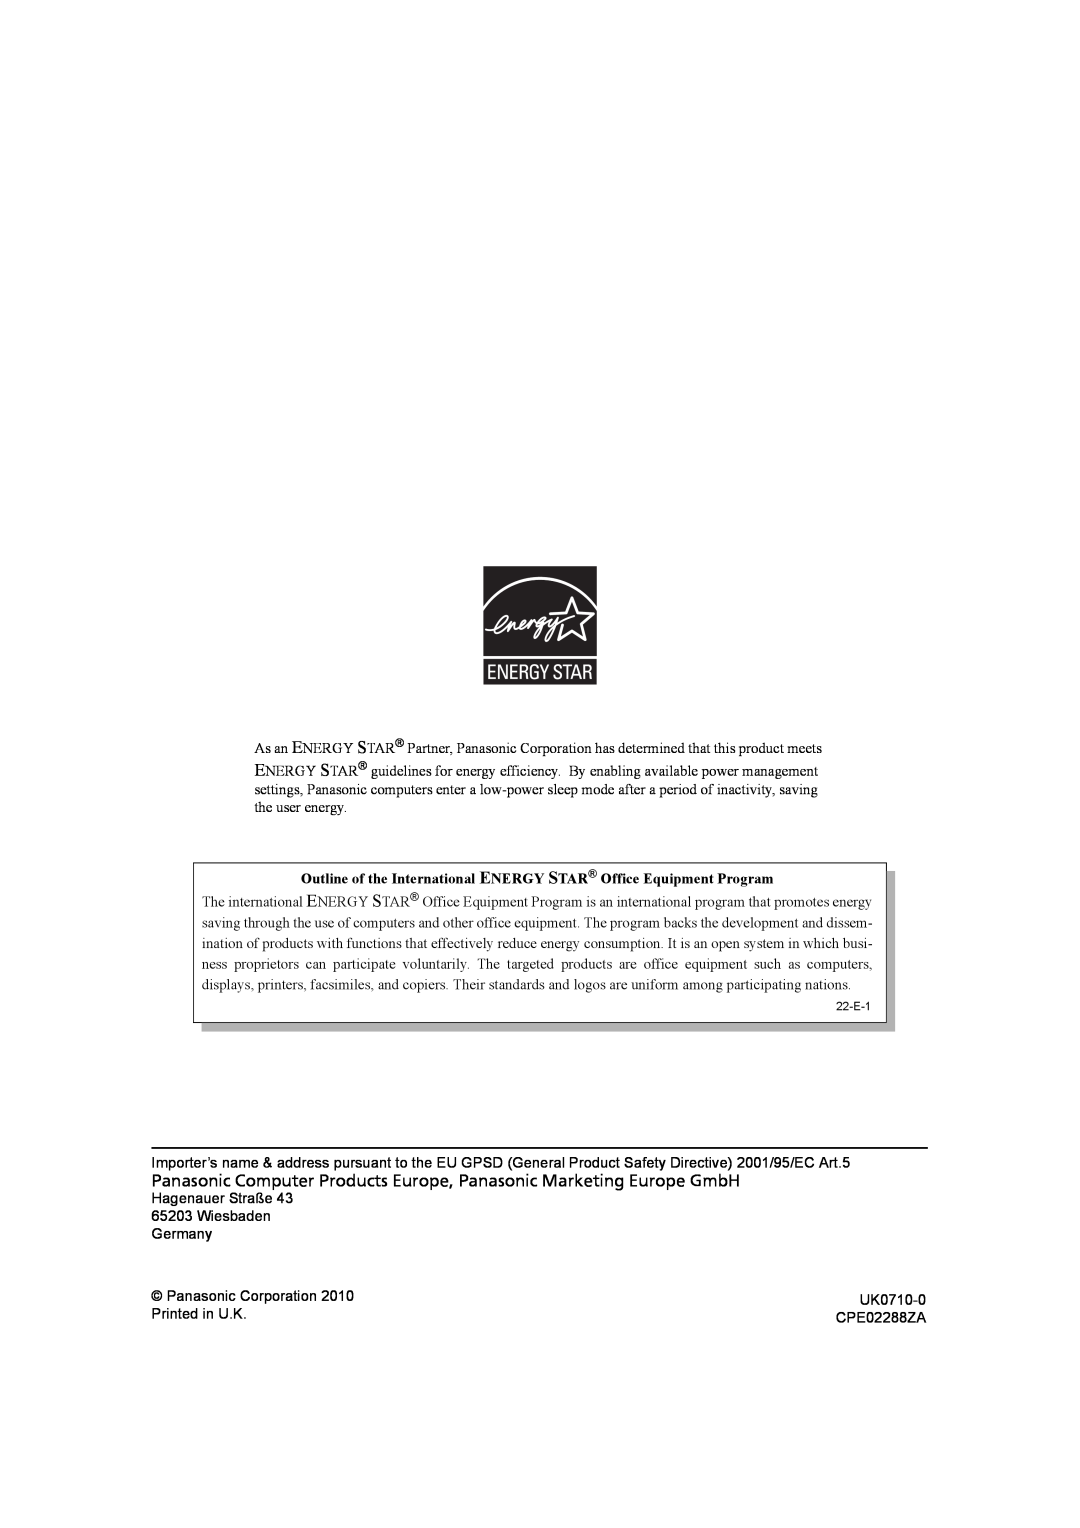 Panasonic CF-F9 appendix Outline of the International ENERGY STAR Office Equipment Program, Panasonic Corporation, UK0710-0 